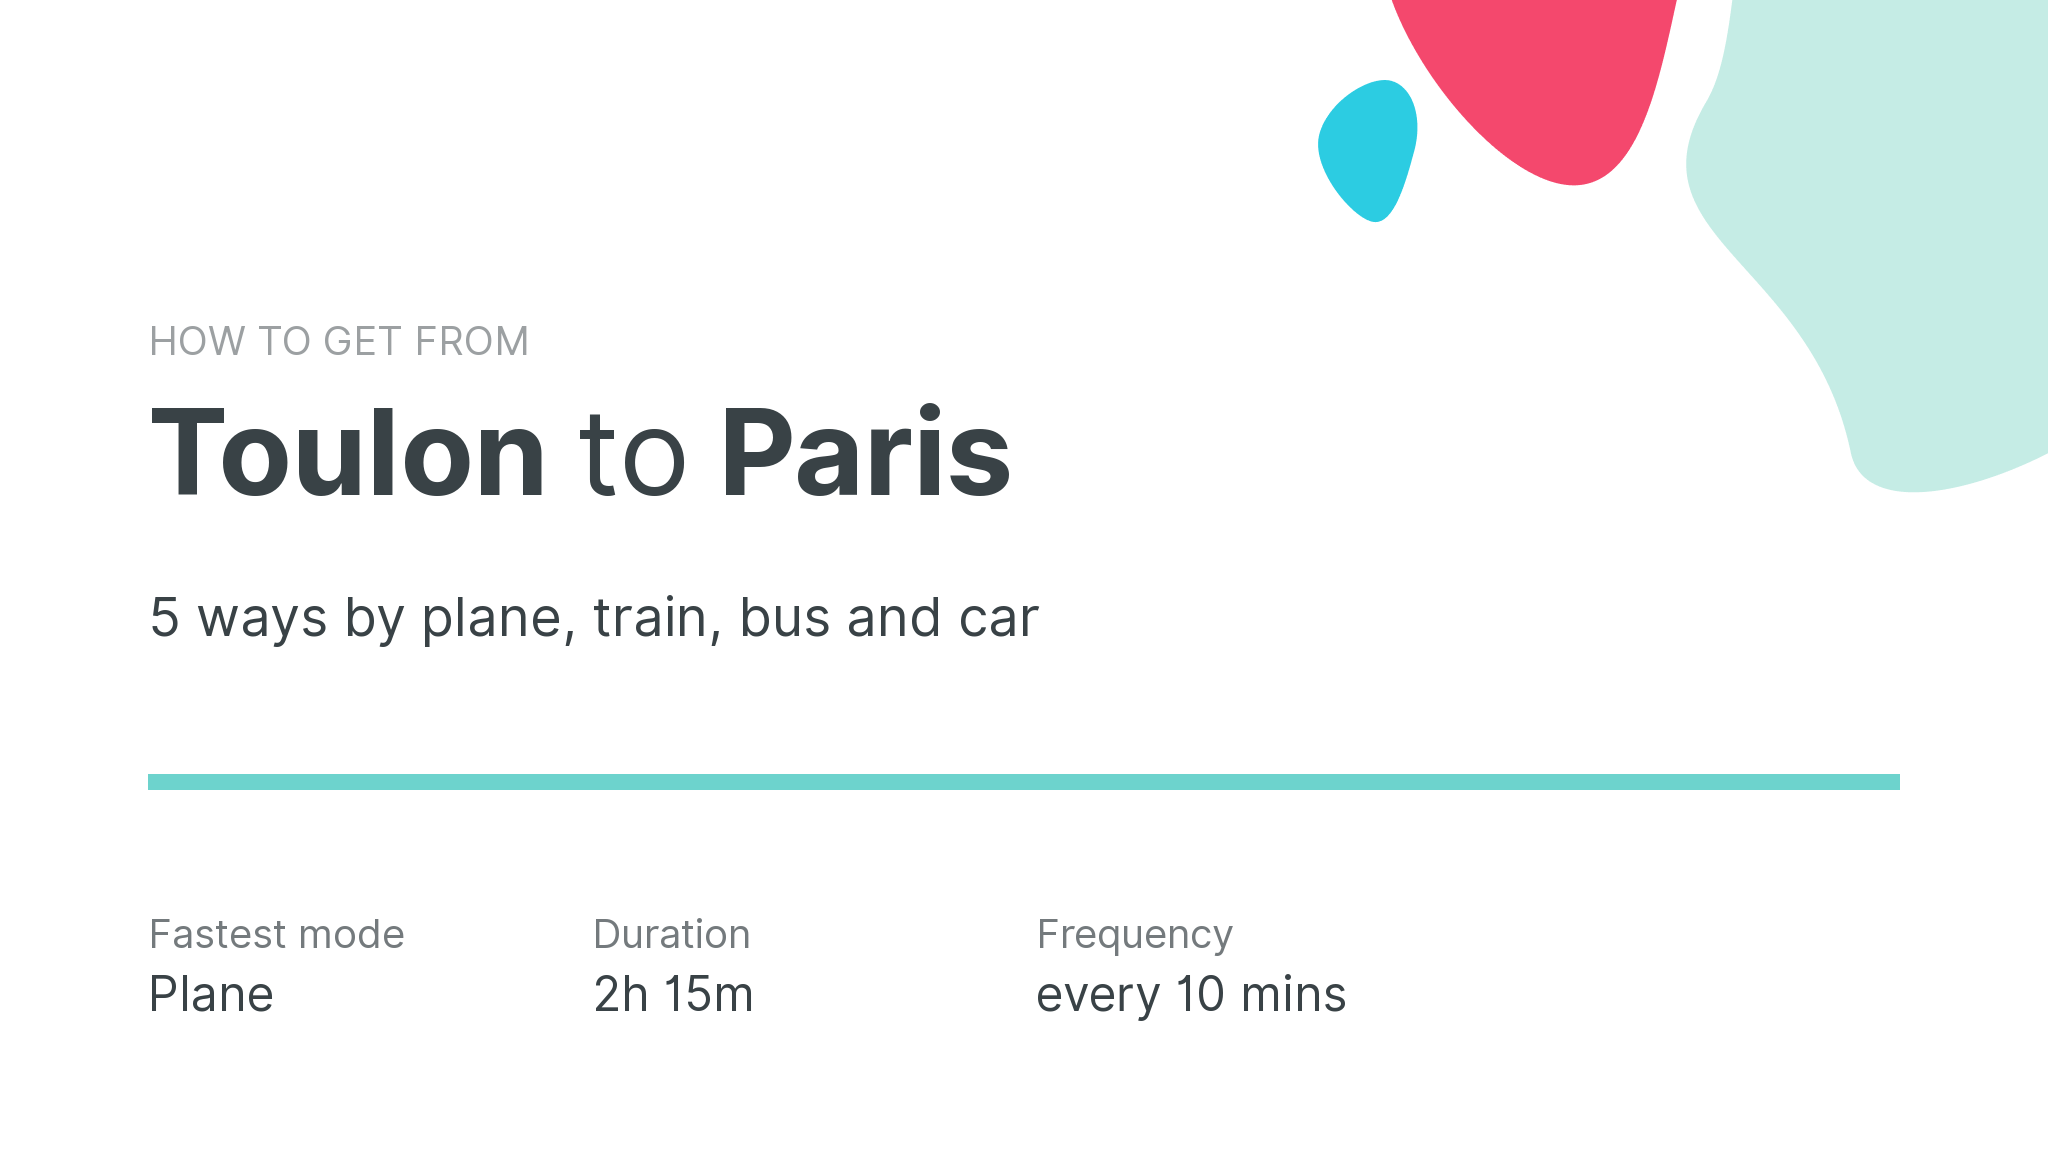 How do I get from Toulon to Paris